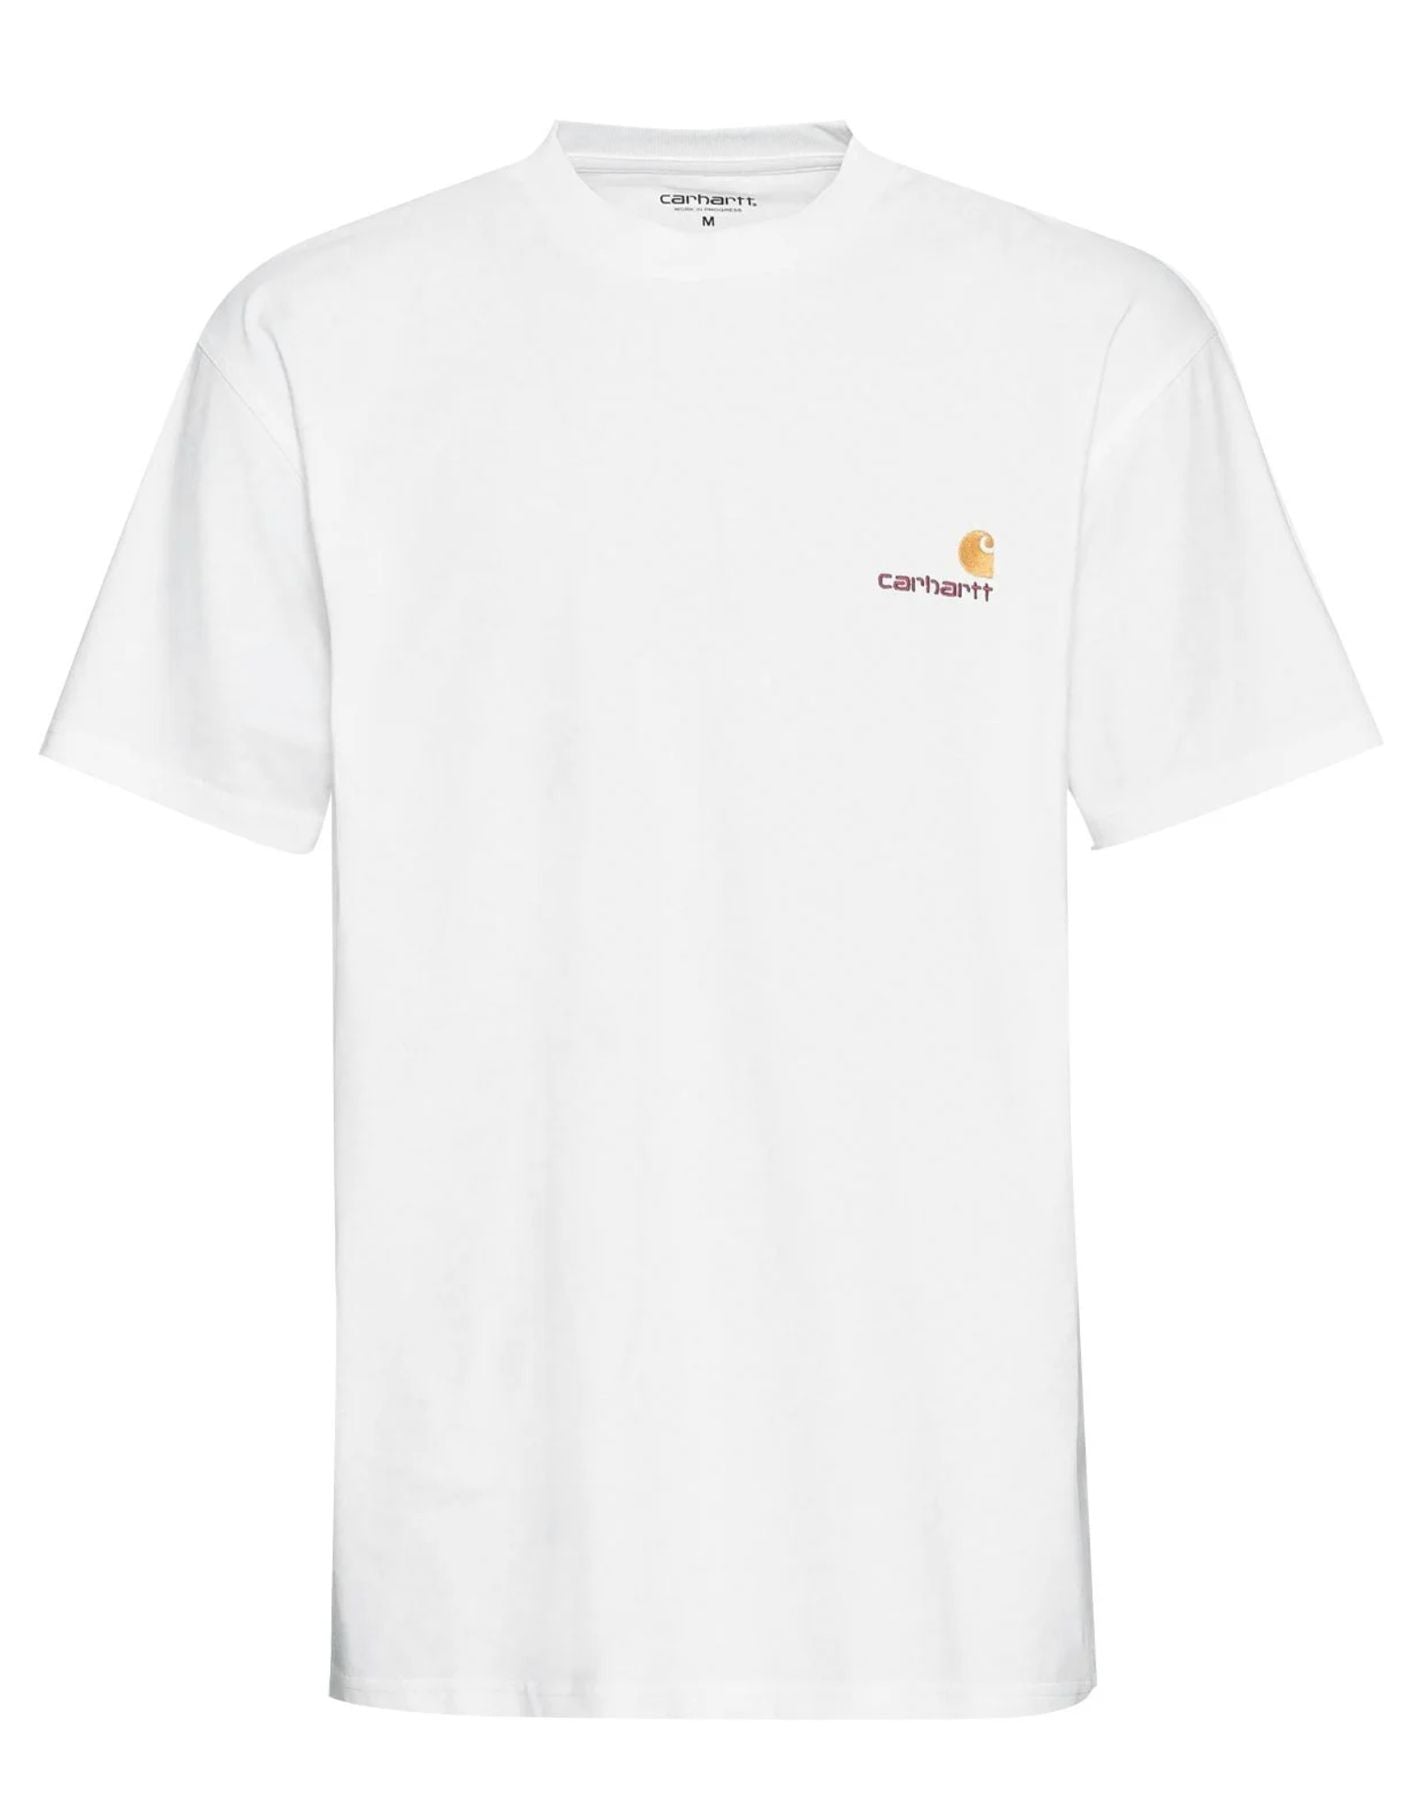 T-shirt man I029956 AMERICAN SCRIPT WHITE CARHARTT WIP